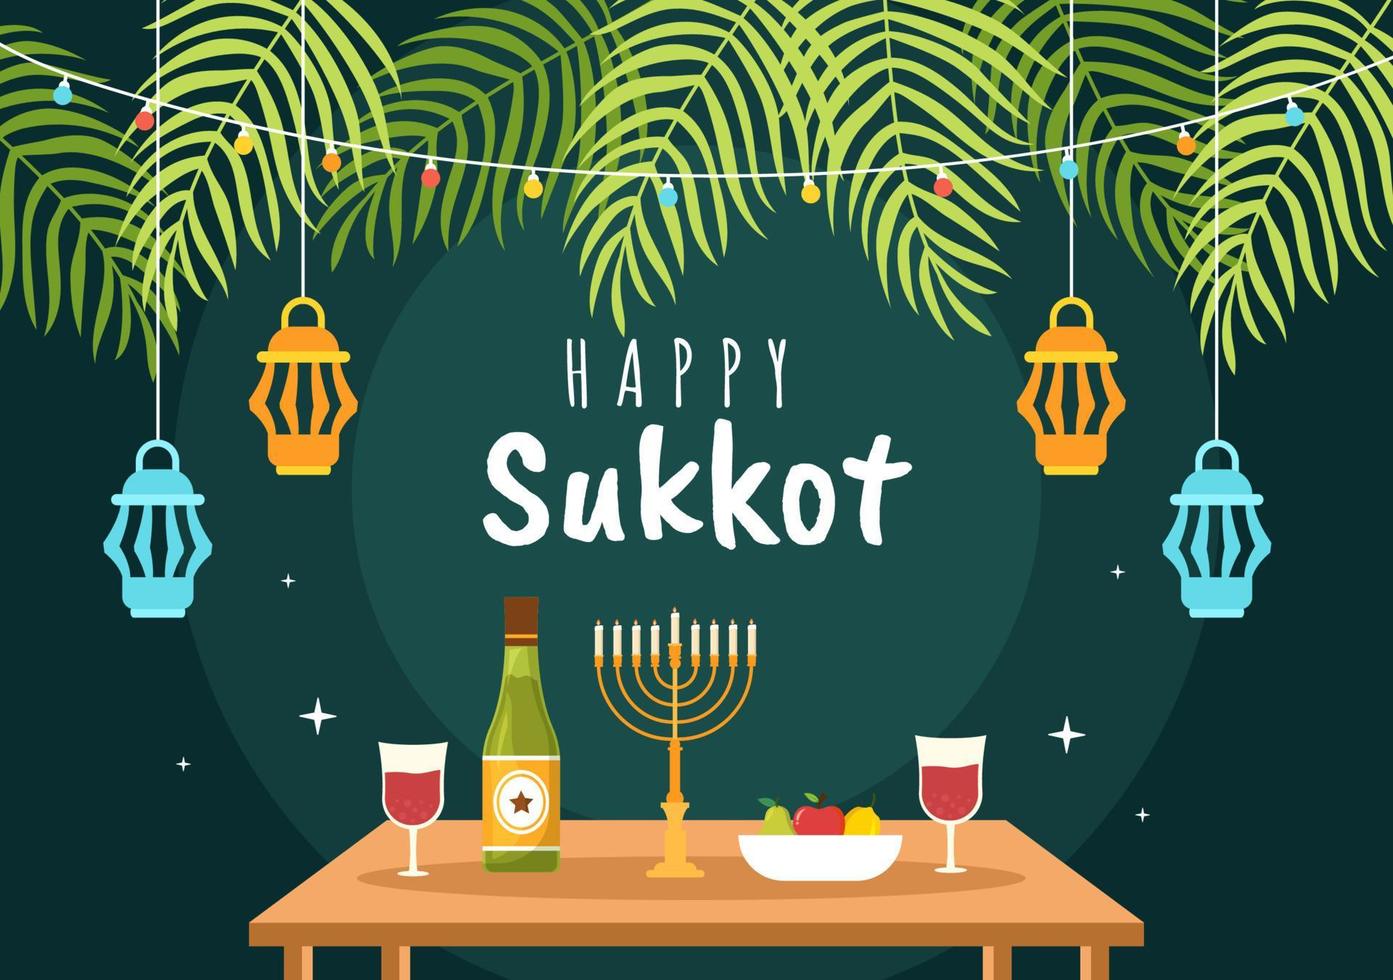 Happy Jewish Holiday Sukkot Hand Drawn Cartoon Flat Illustration with sukkah, etrog, lulav, Arava, Hadas and Decoration Background Design vector